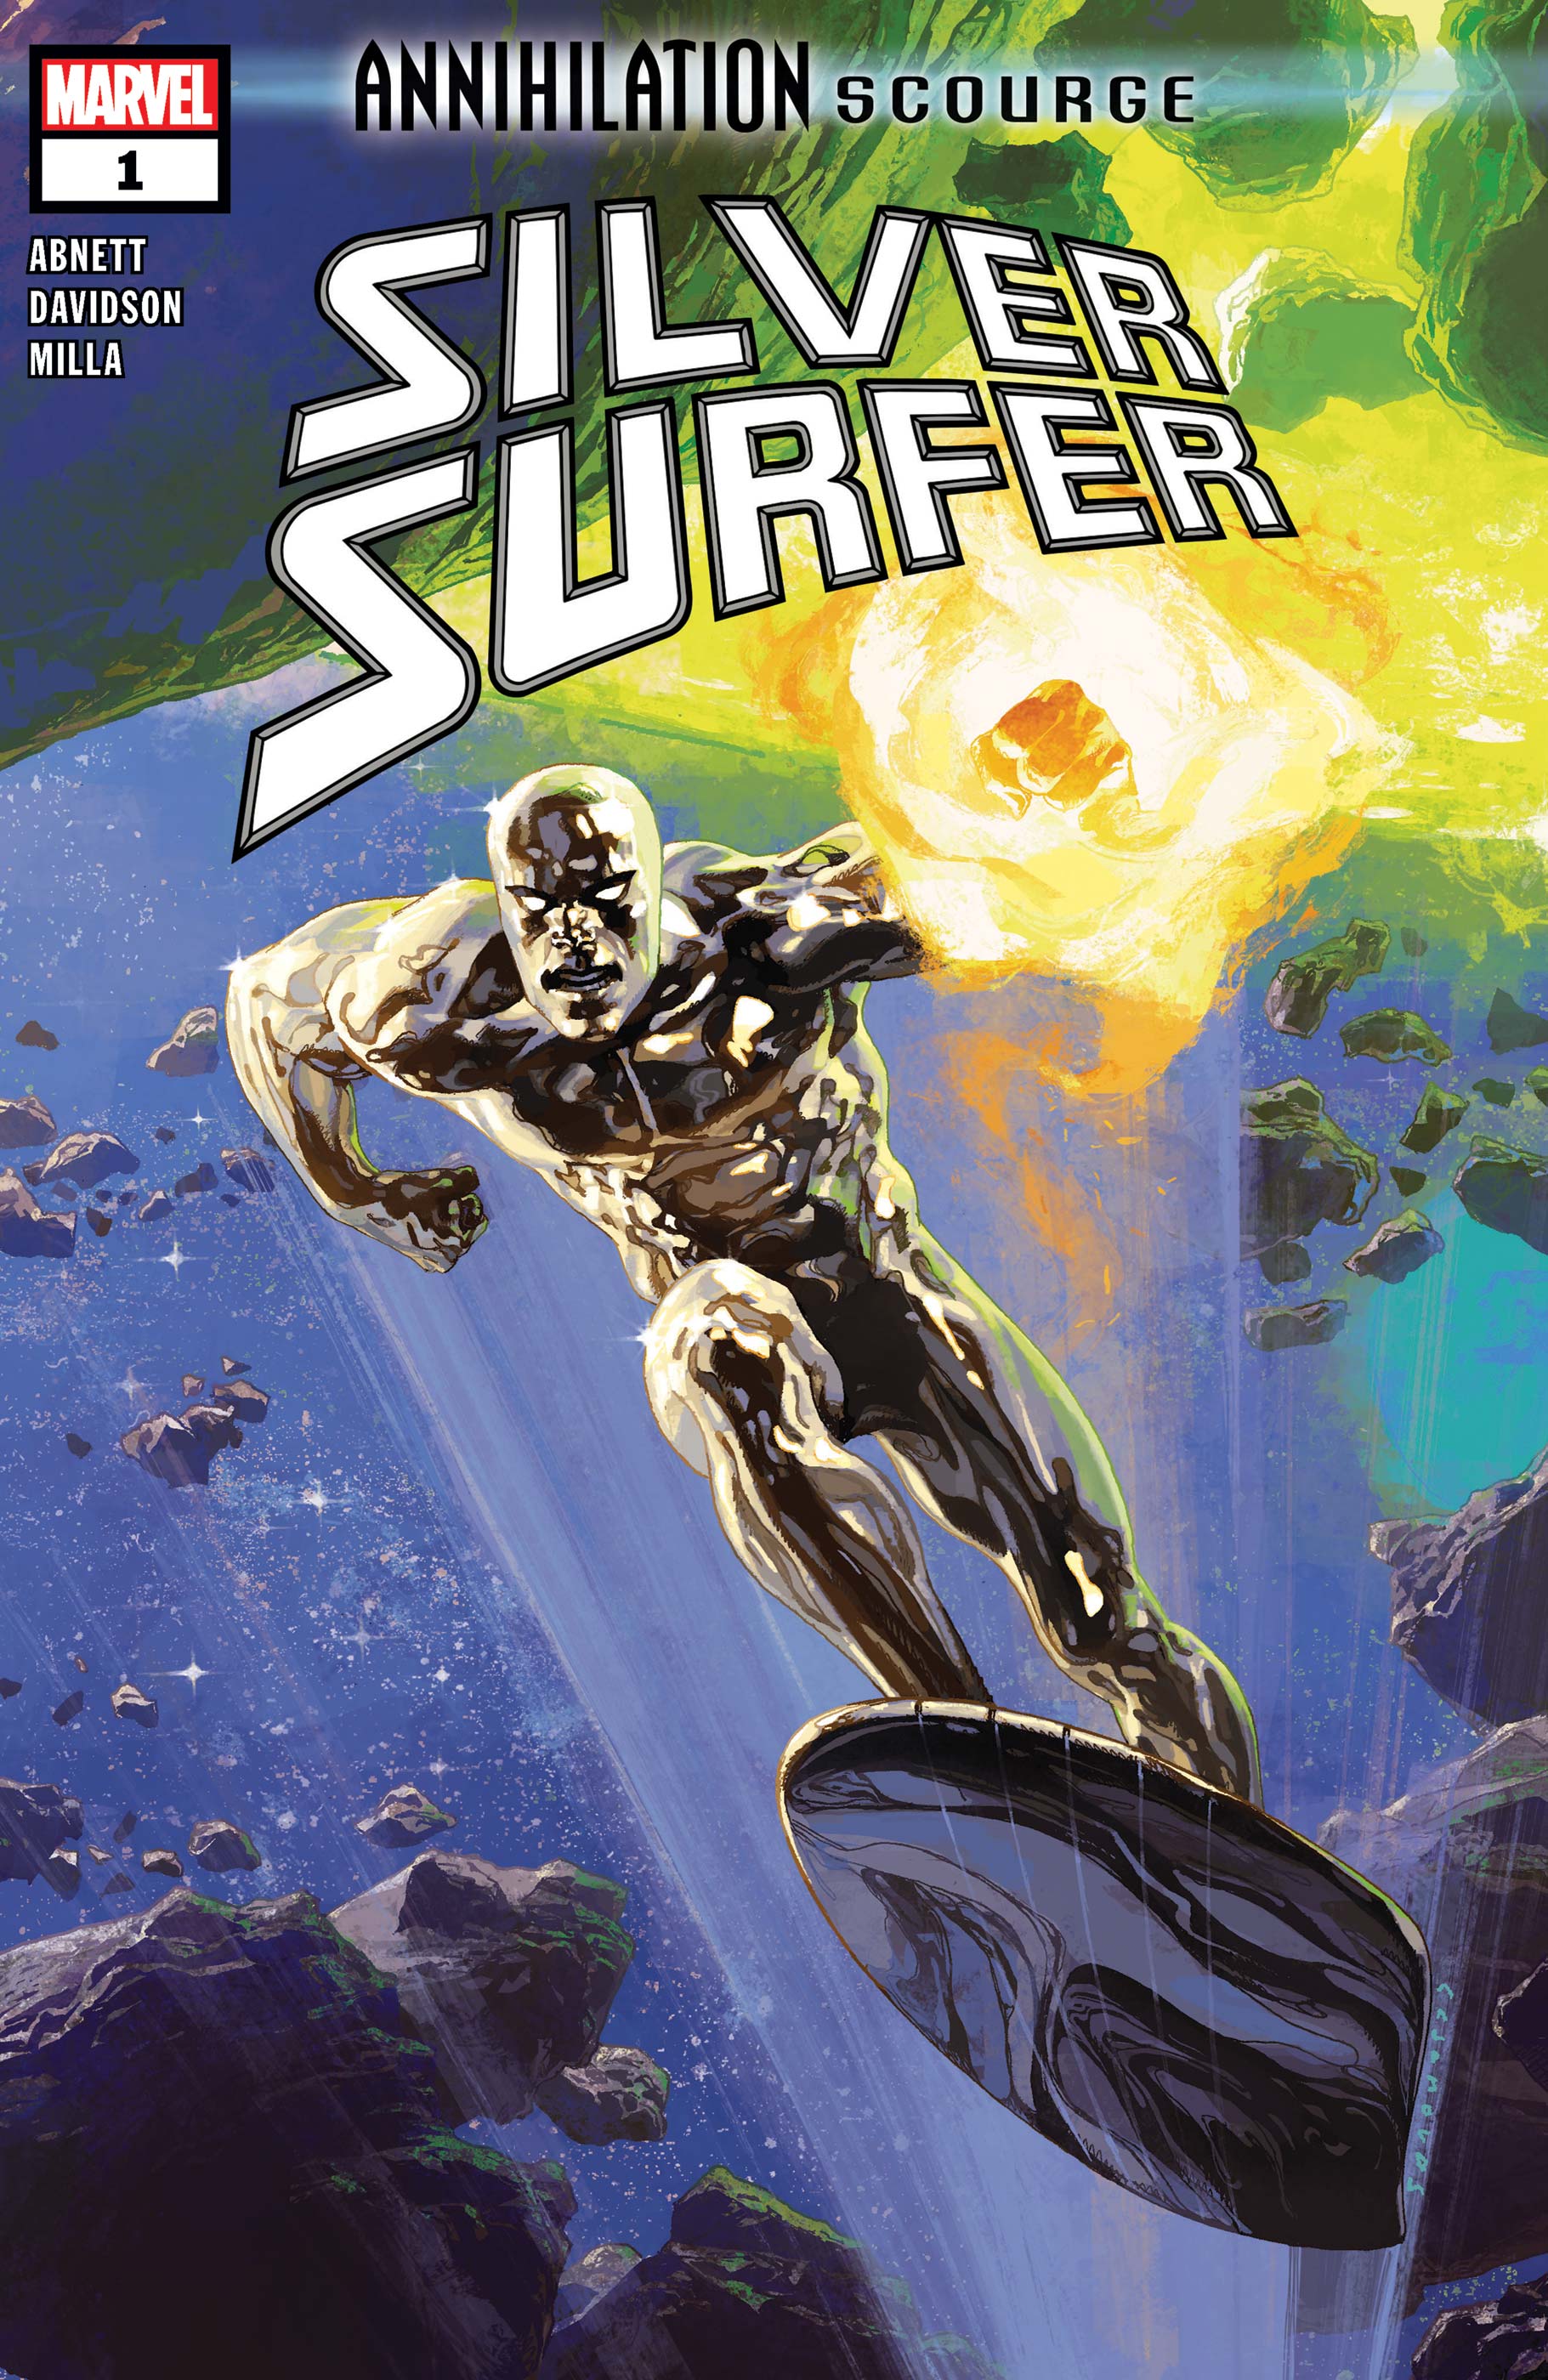 Annihilation - Scourge: Silver Surfer (2019) #1